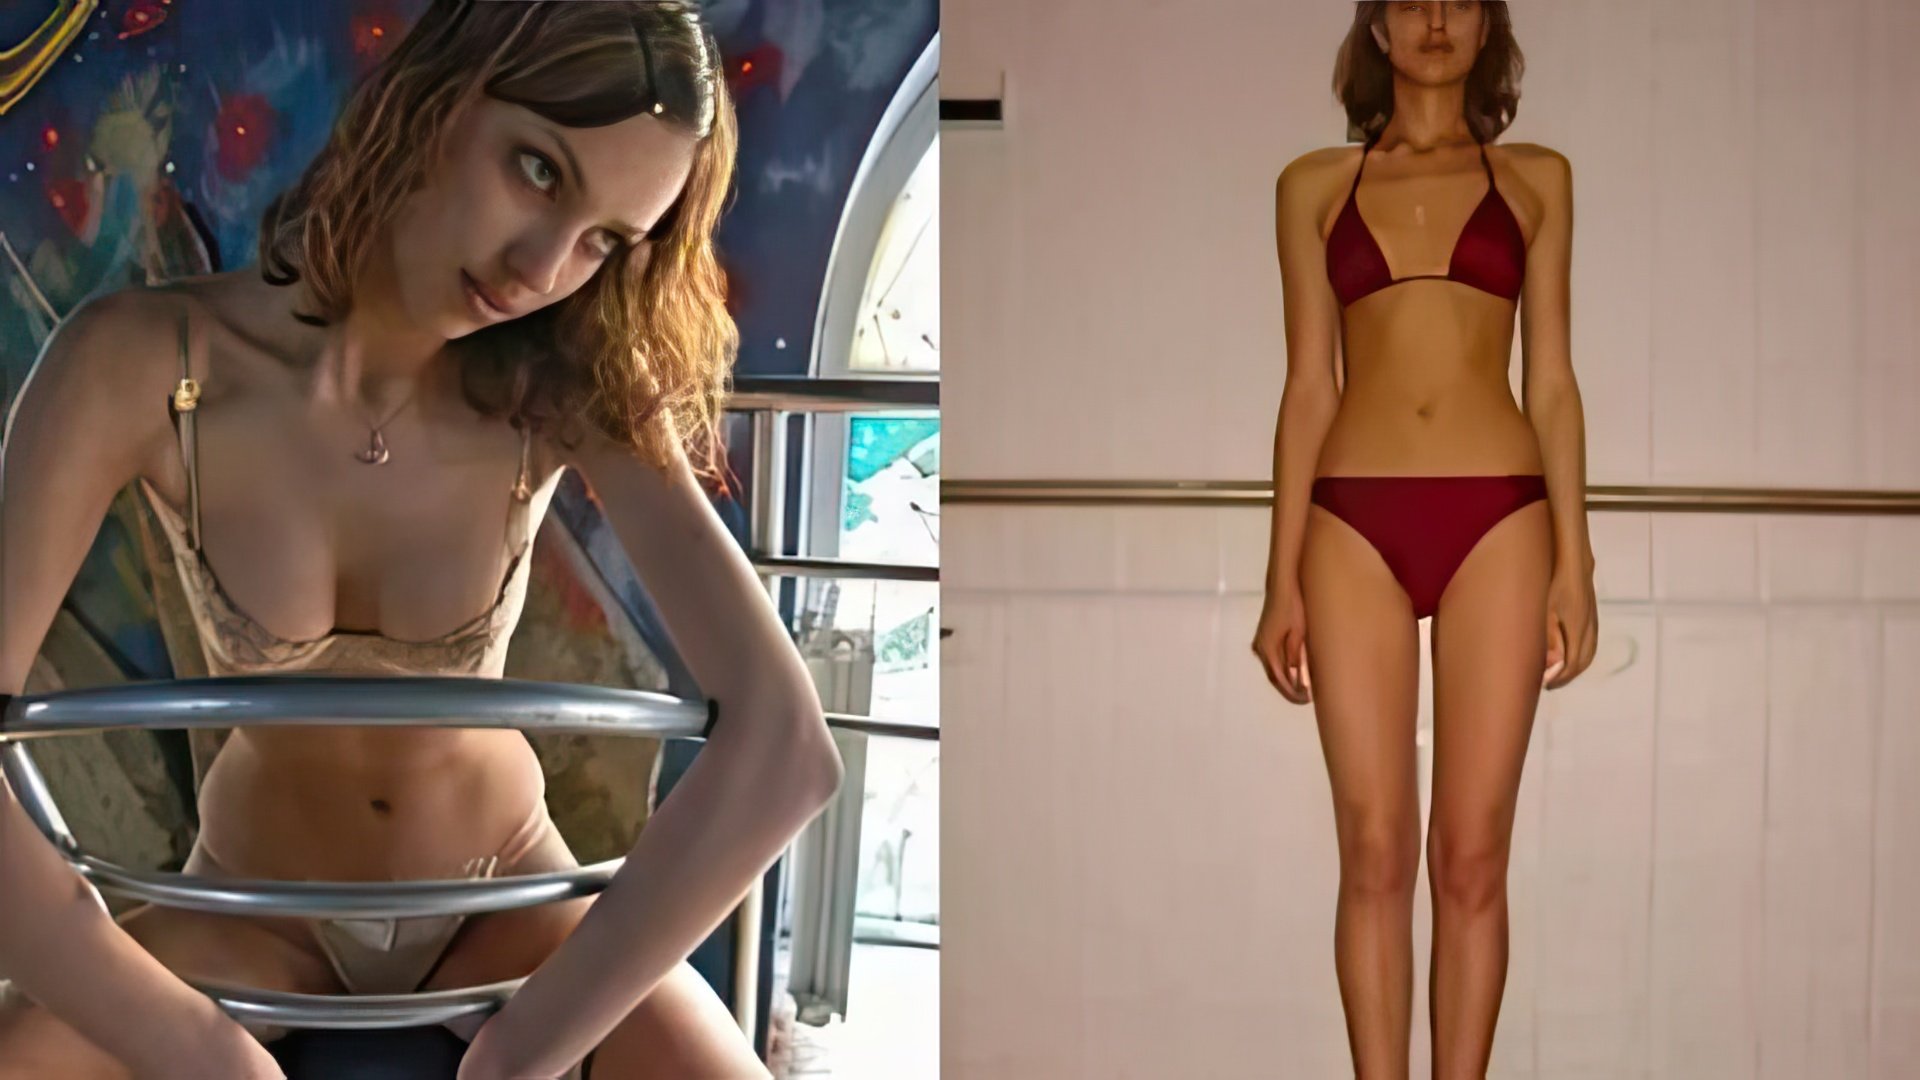 Irina Shayk became a lingerie model